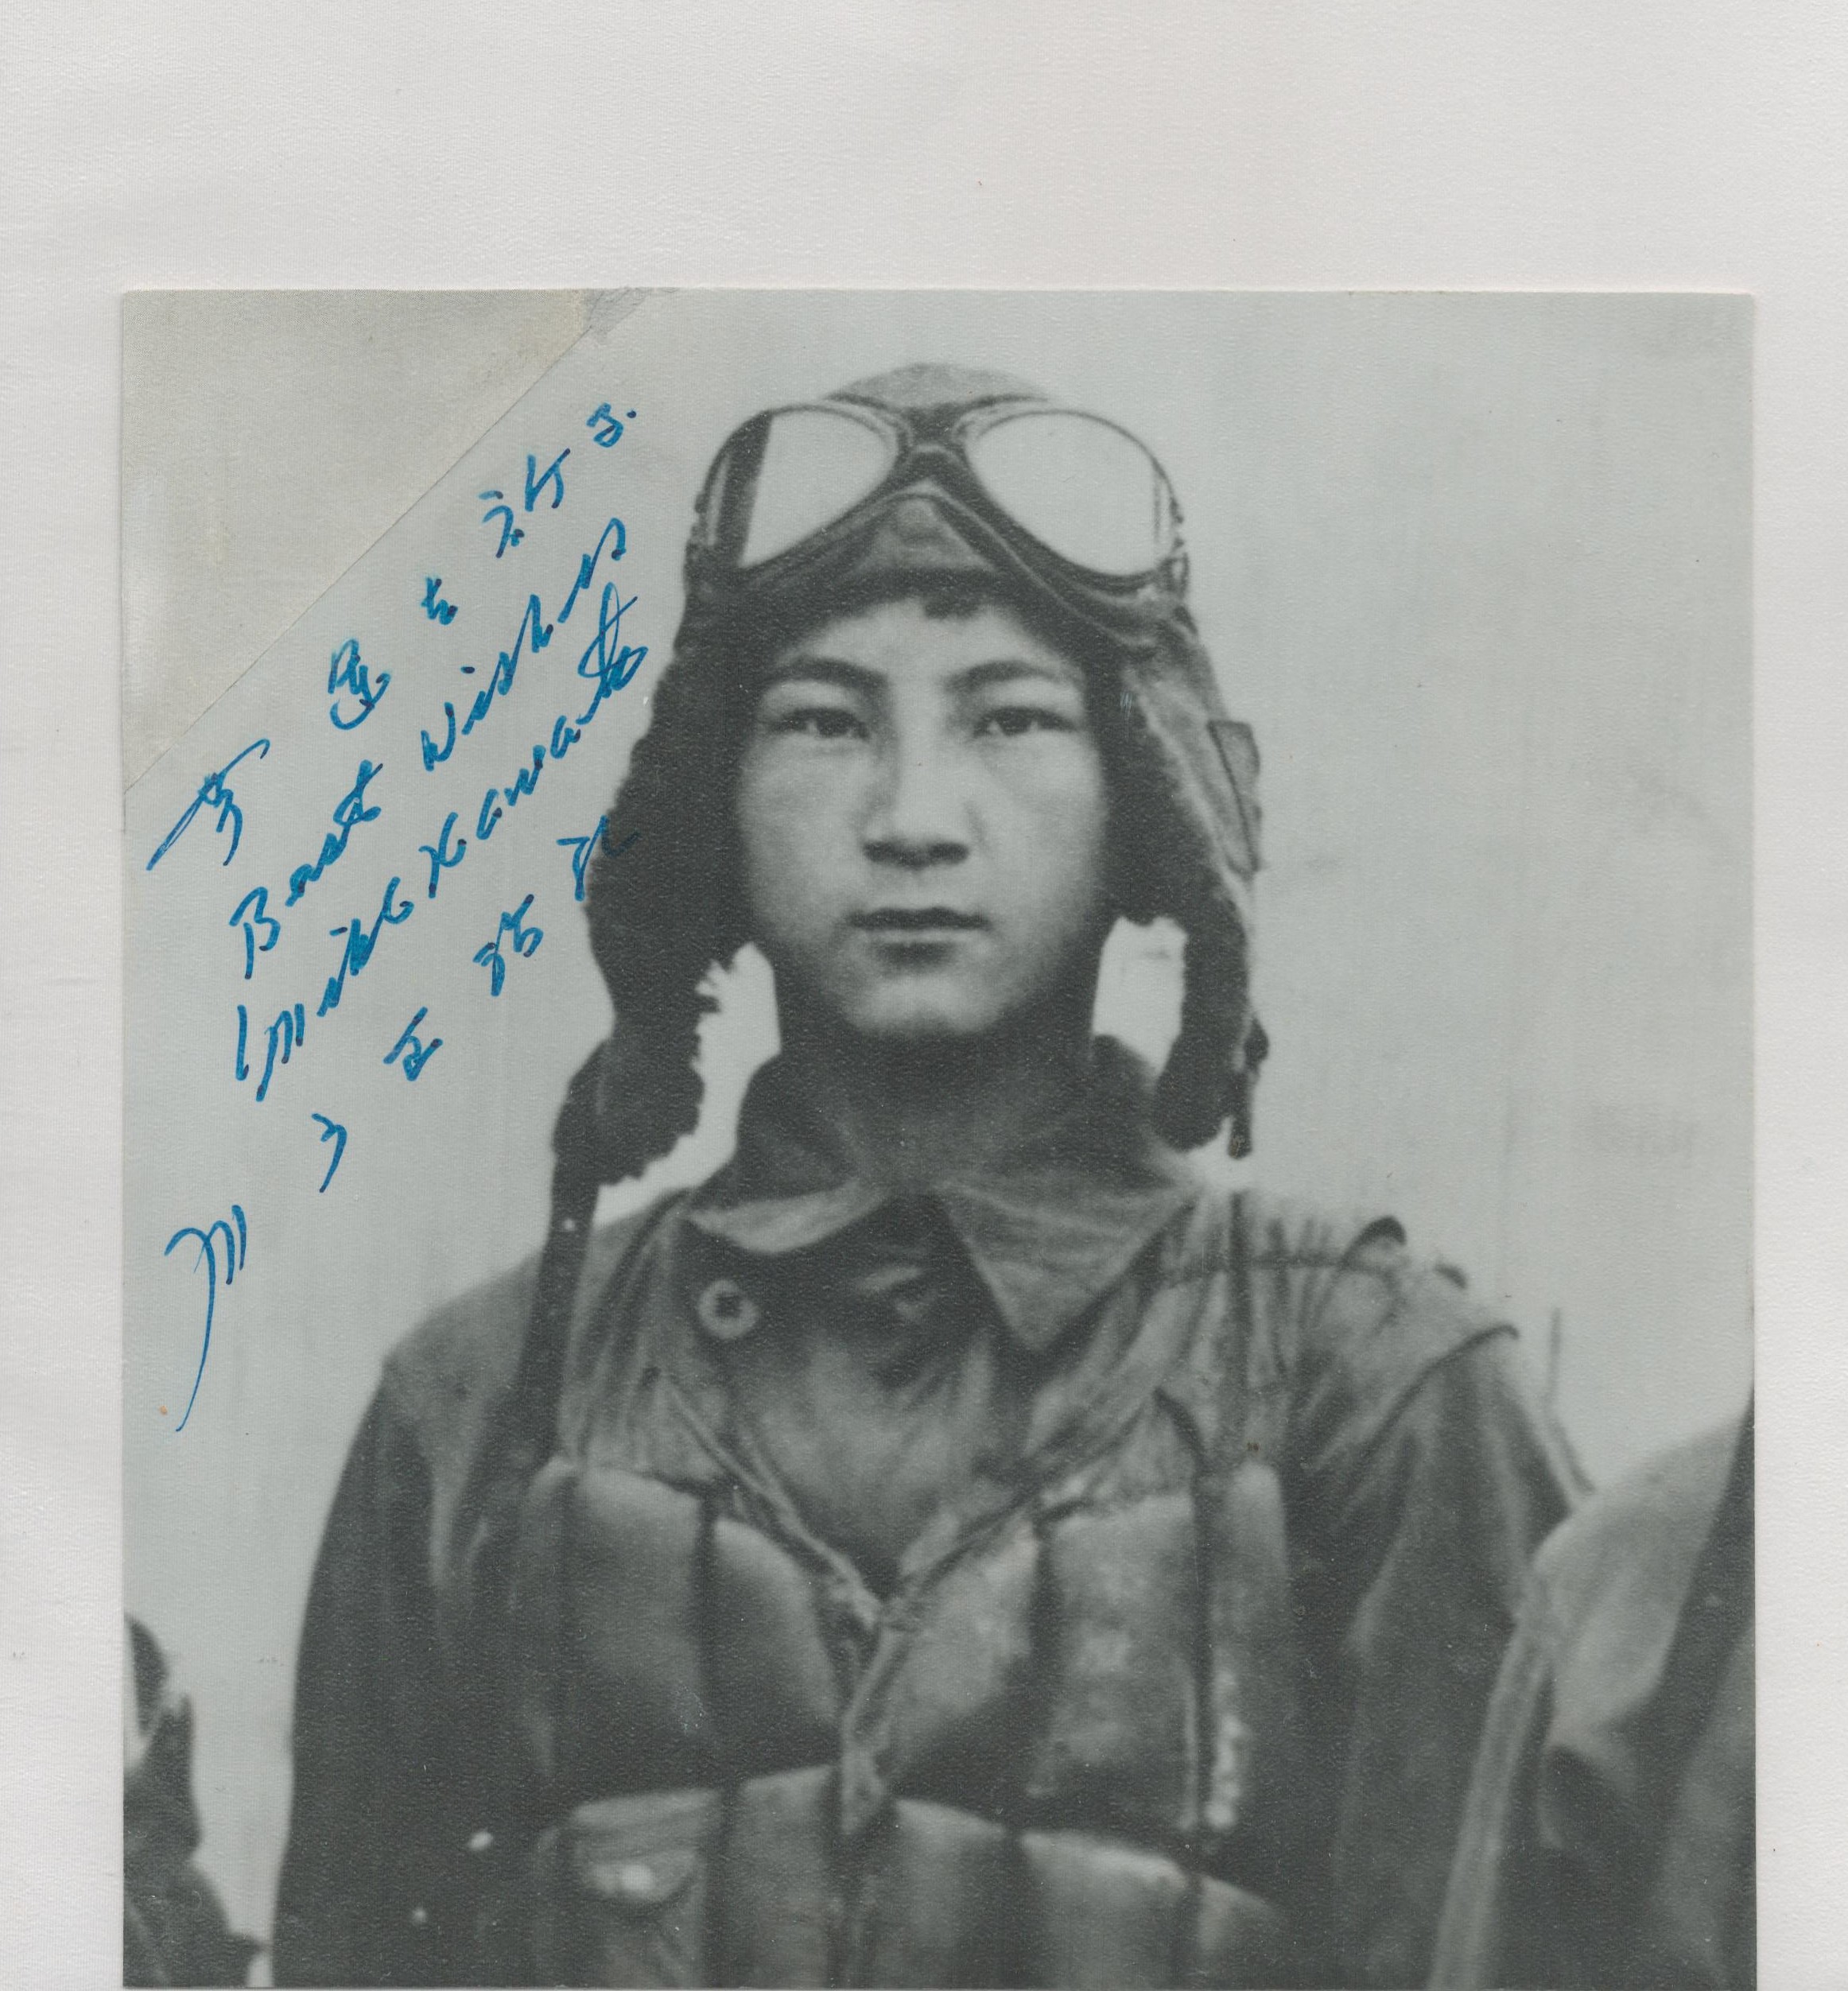 WW2. Japanese Flying Ace Masajiro "Mike" Kawato Signed 7 x 7 inch Black and White Photo. Damage to